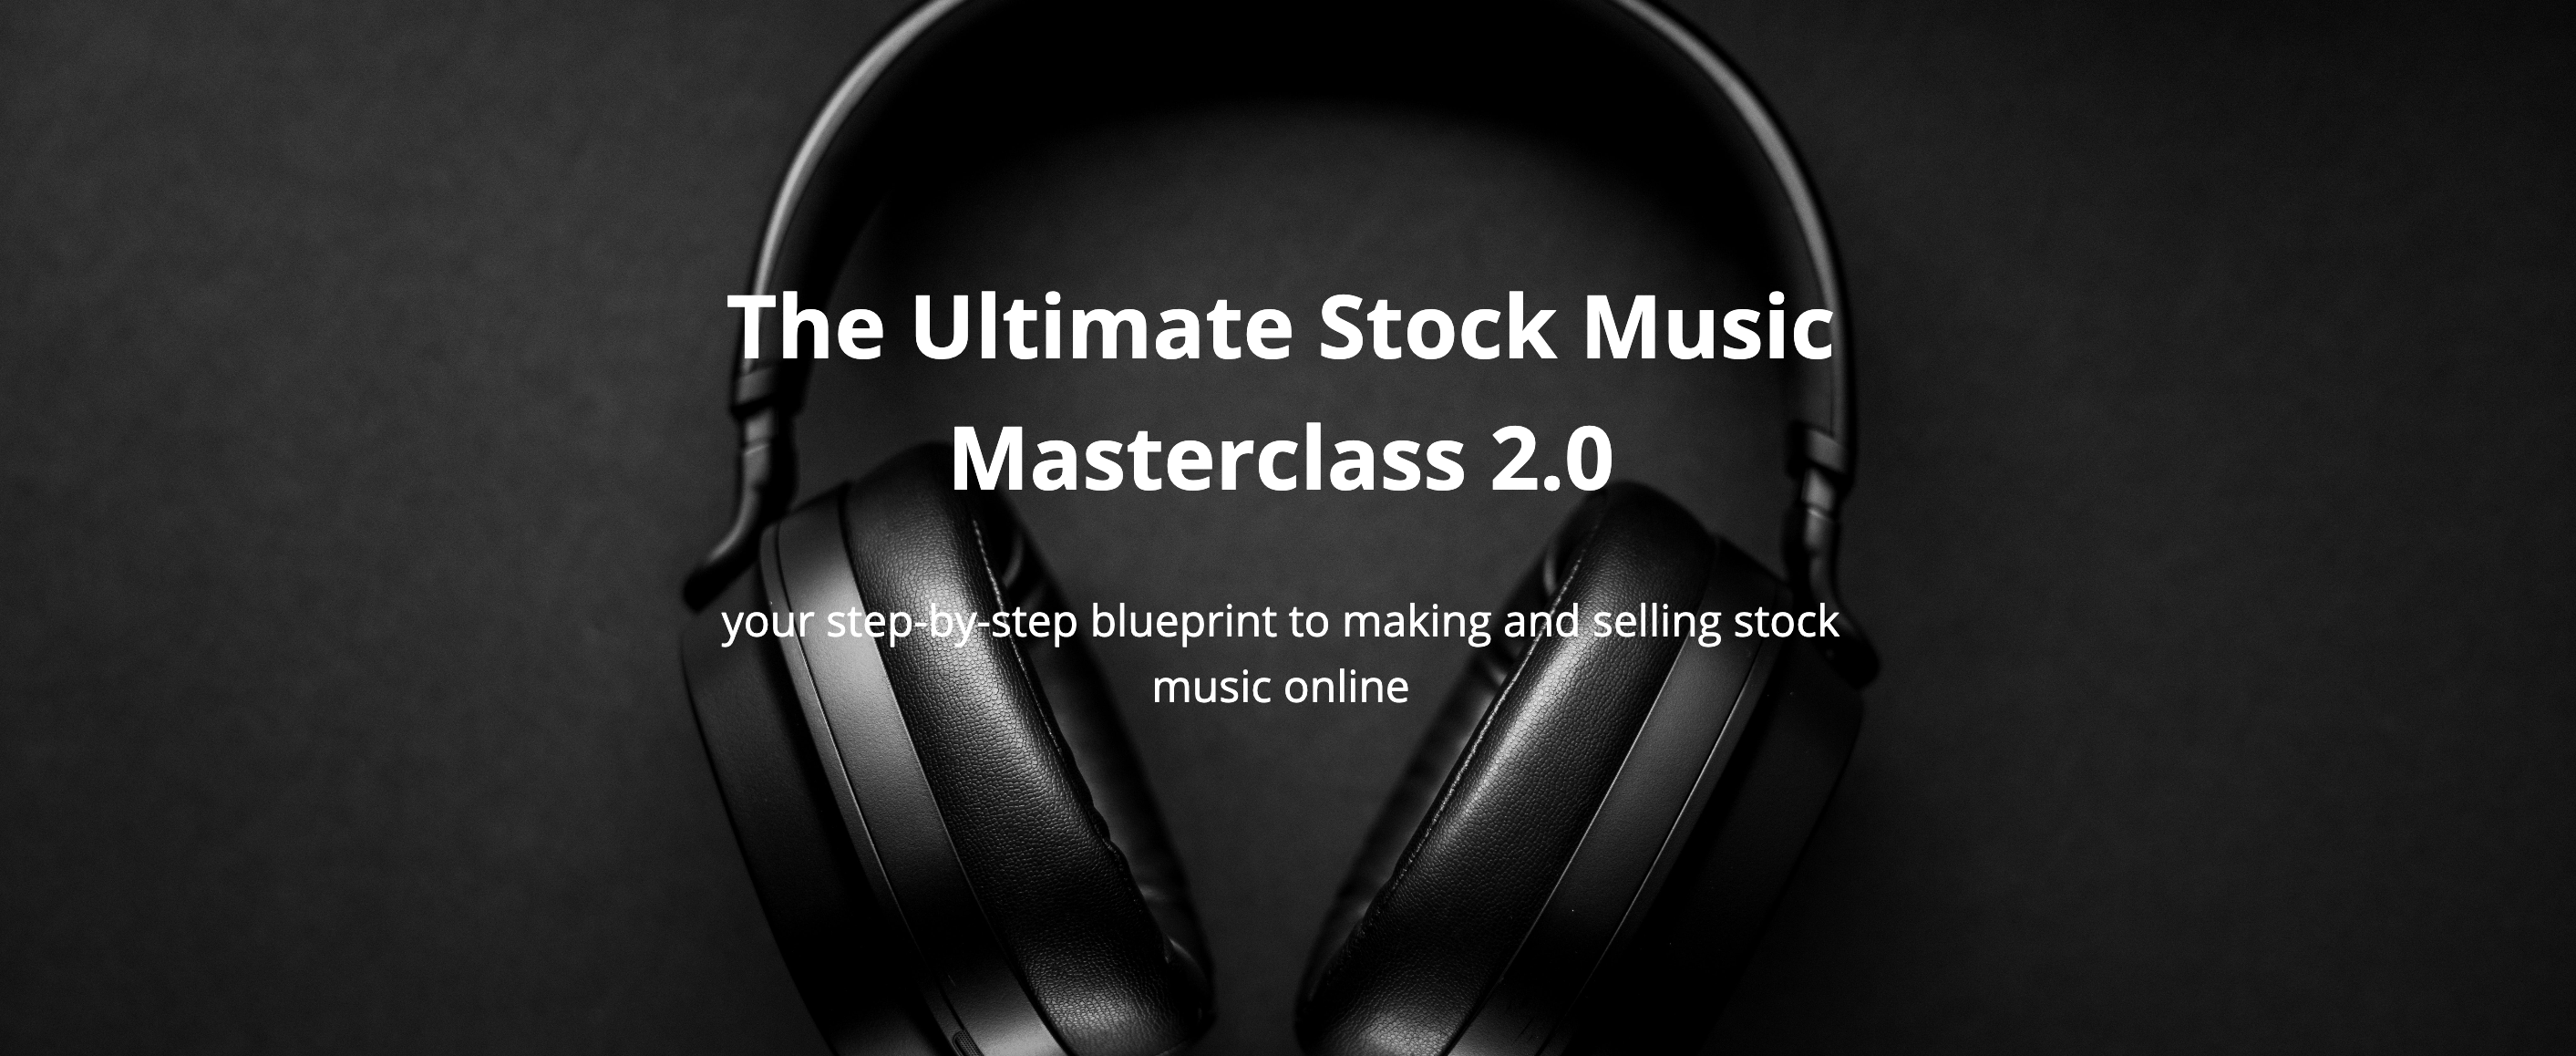 The Ultimate Stock Music Masterclass 2.0 - Daniel Carrizalez